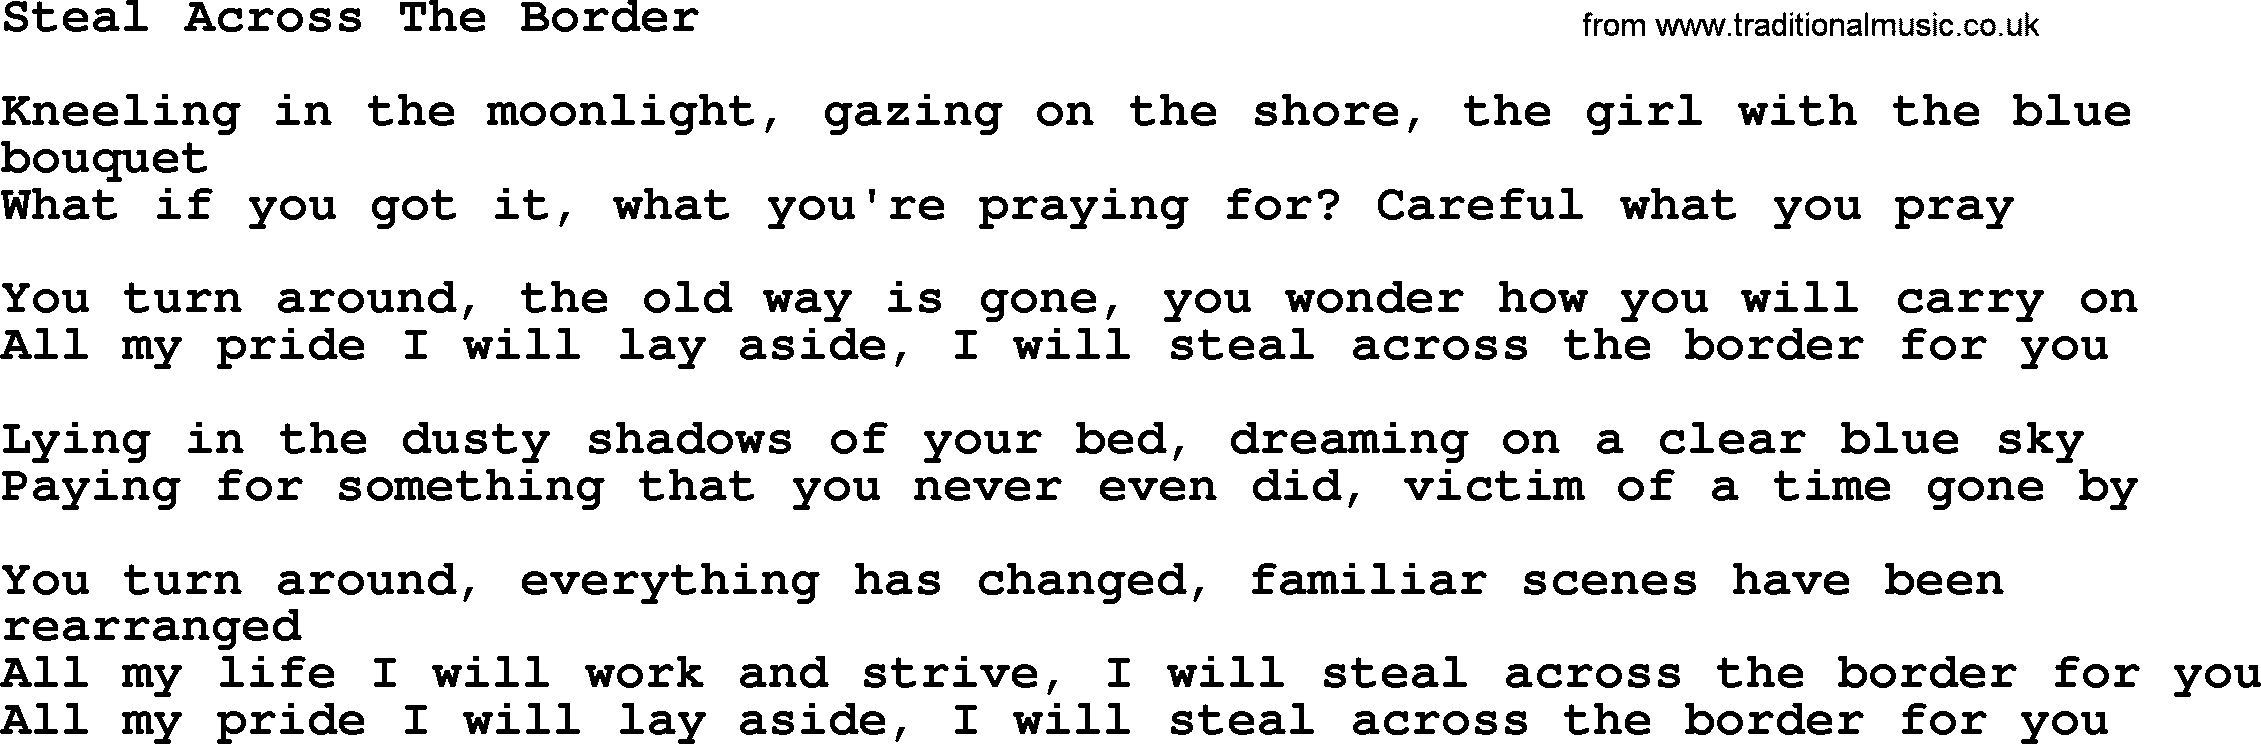 Joan Baez song Steal Across The Border, lyrics